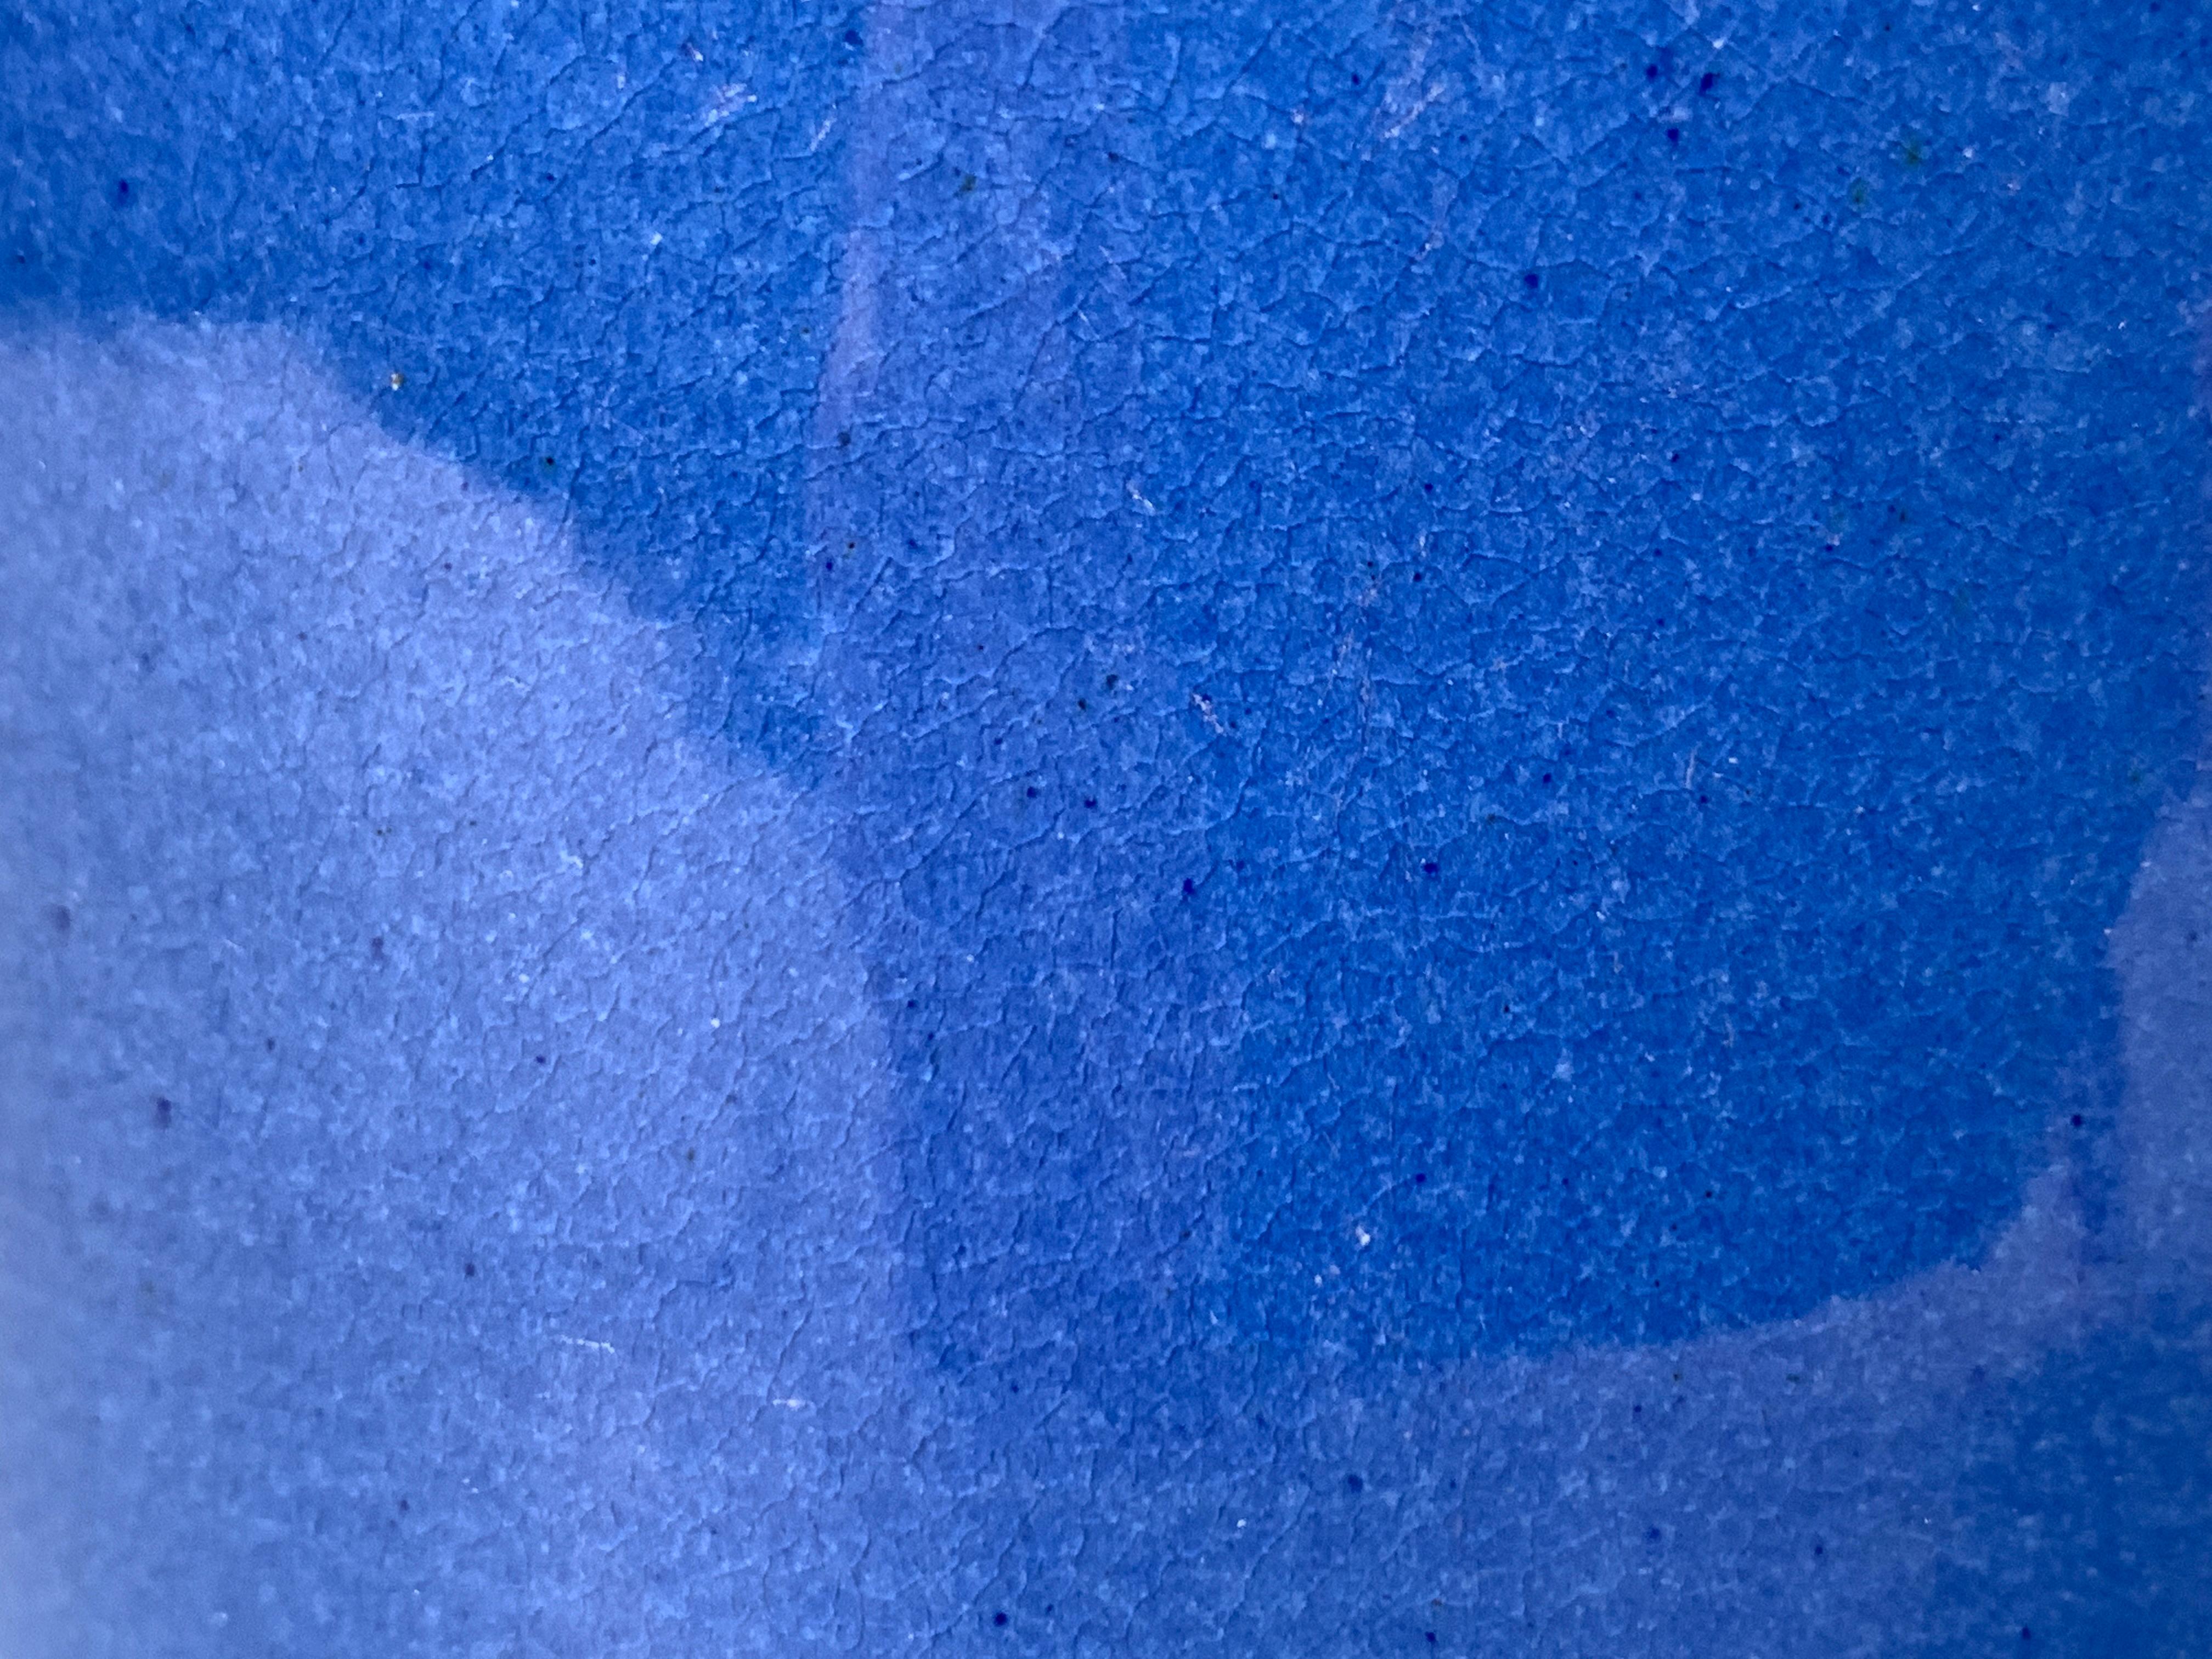 Mochaware Mug with Royal Blue Slip and Black Geometric Designs Made England 5